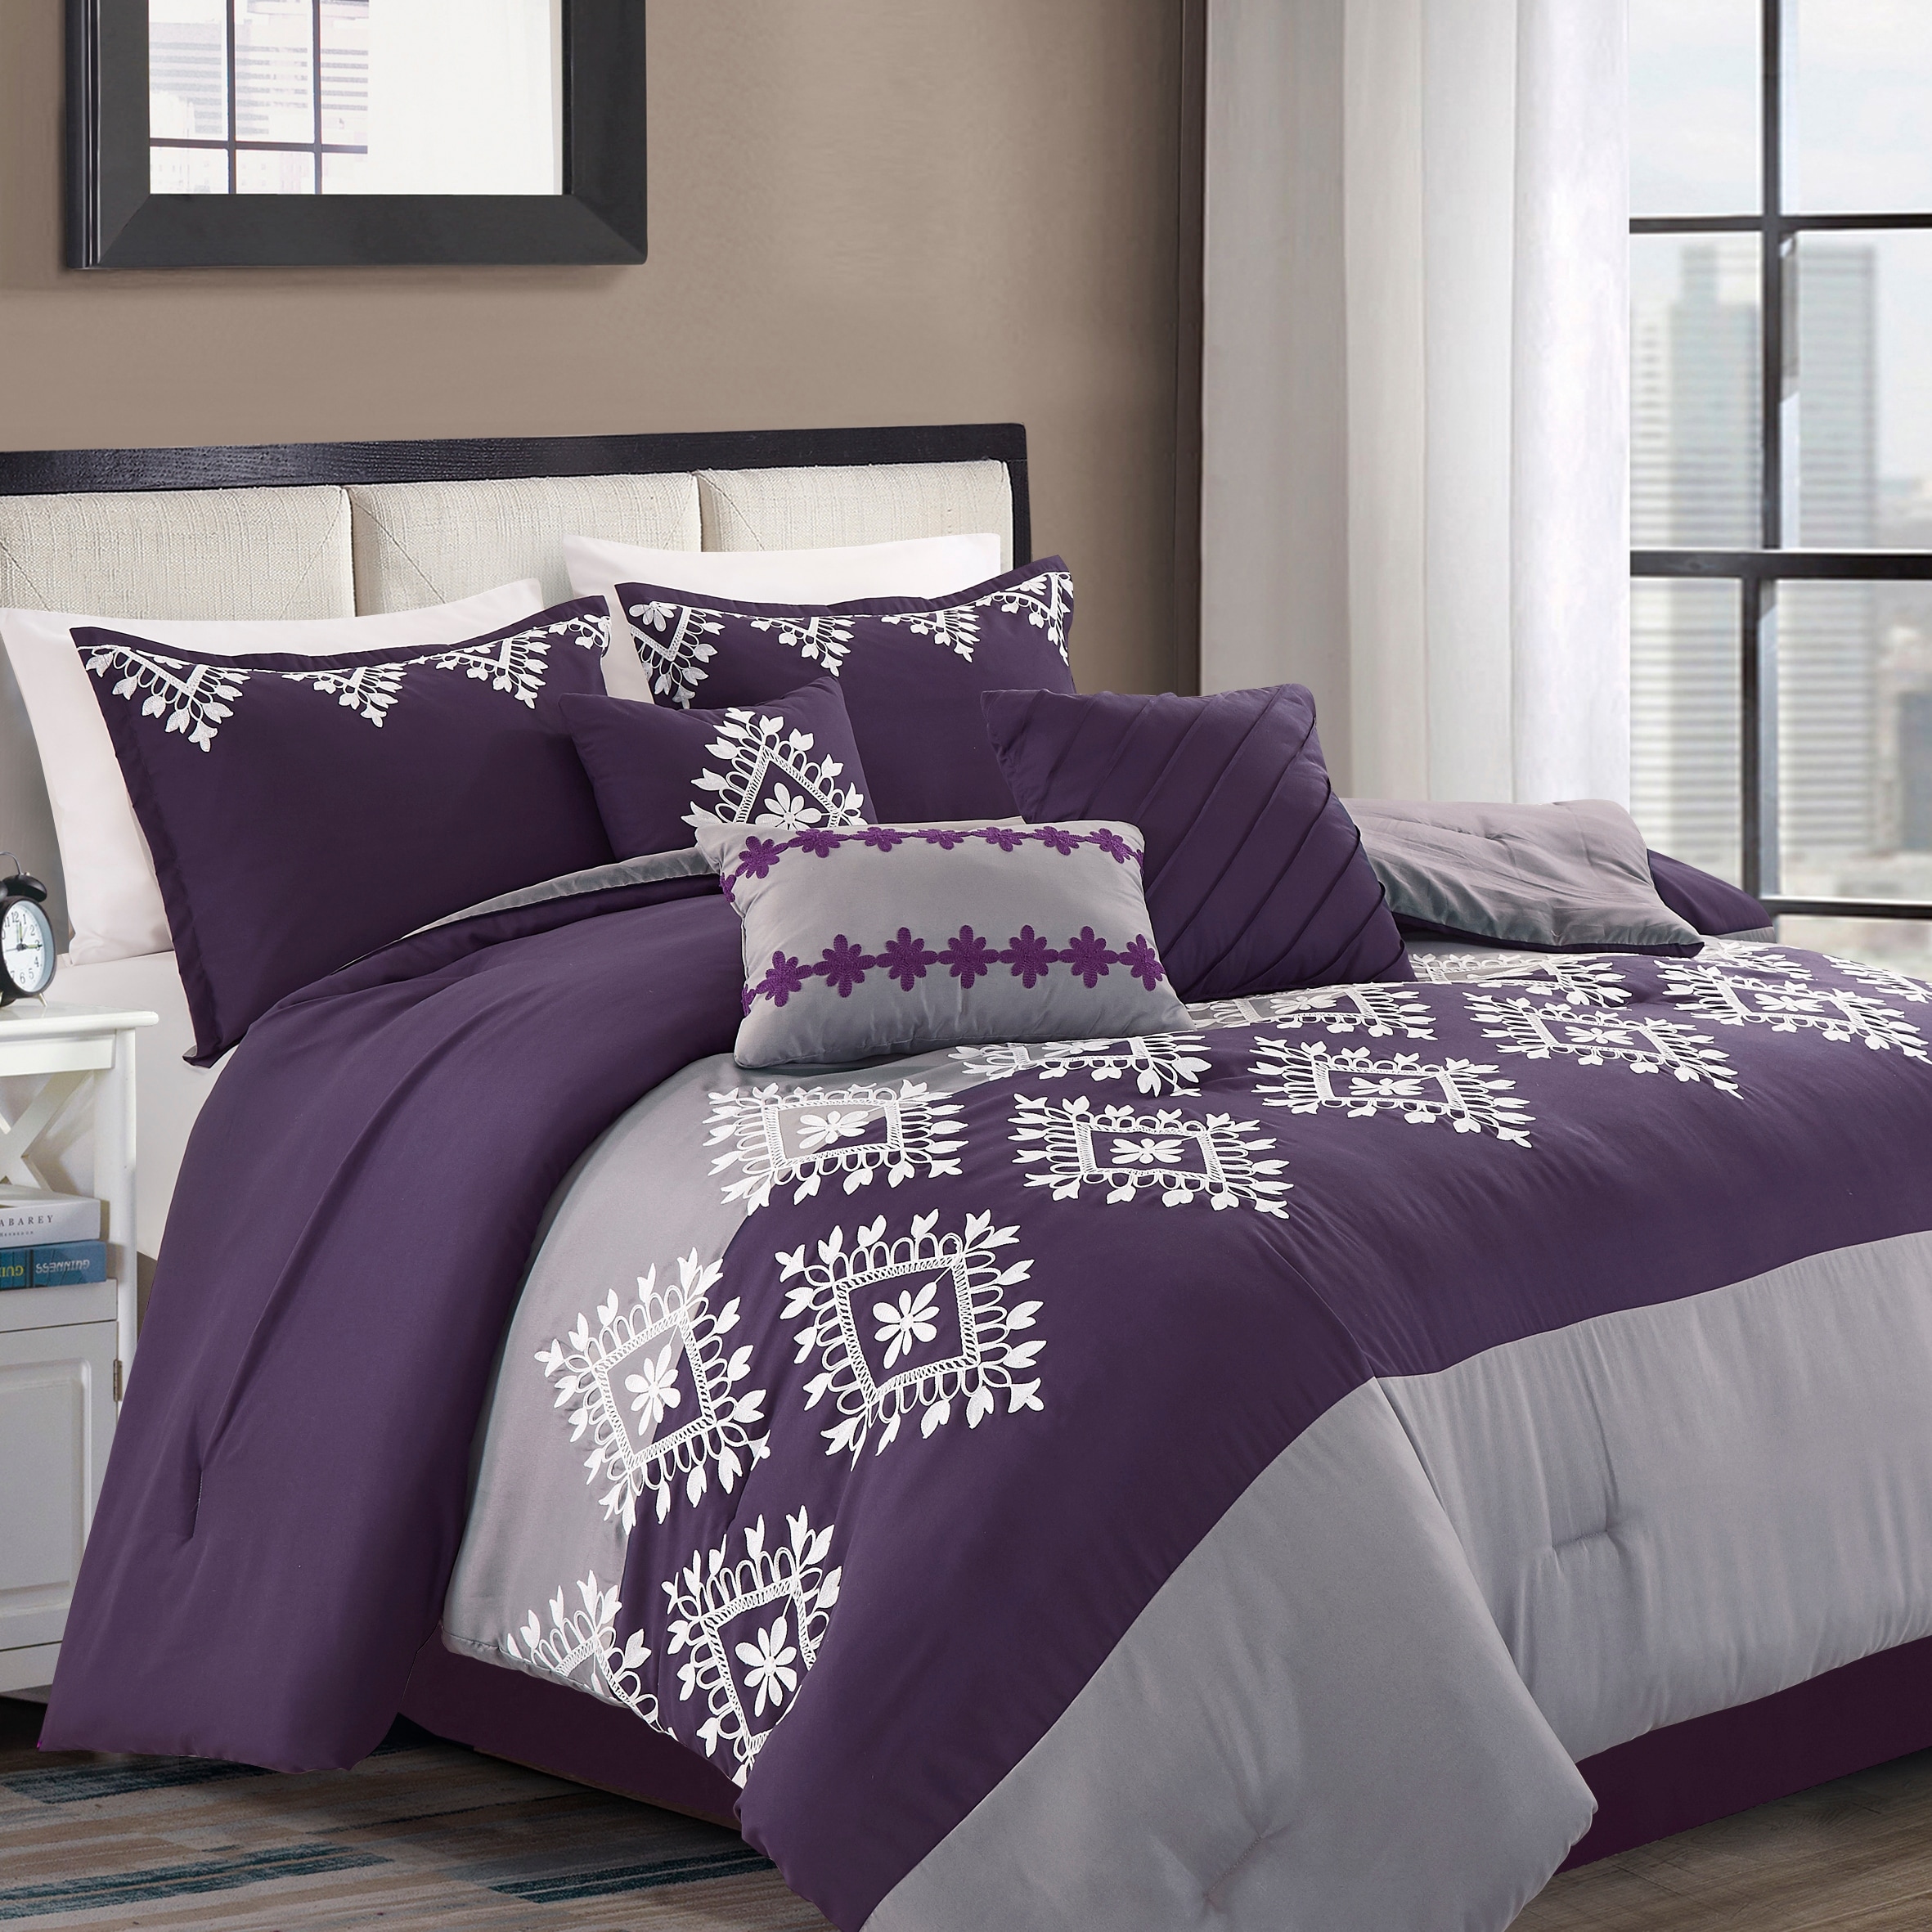 Details about   HIG 7Pcs Embroidered Comforter Set-100% Brushed Microfiber-All Season Used-21958 